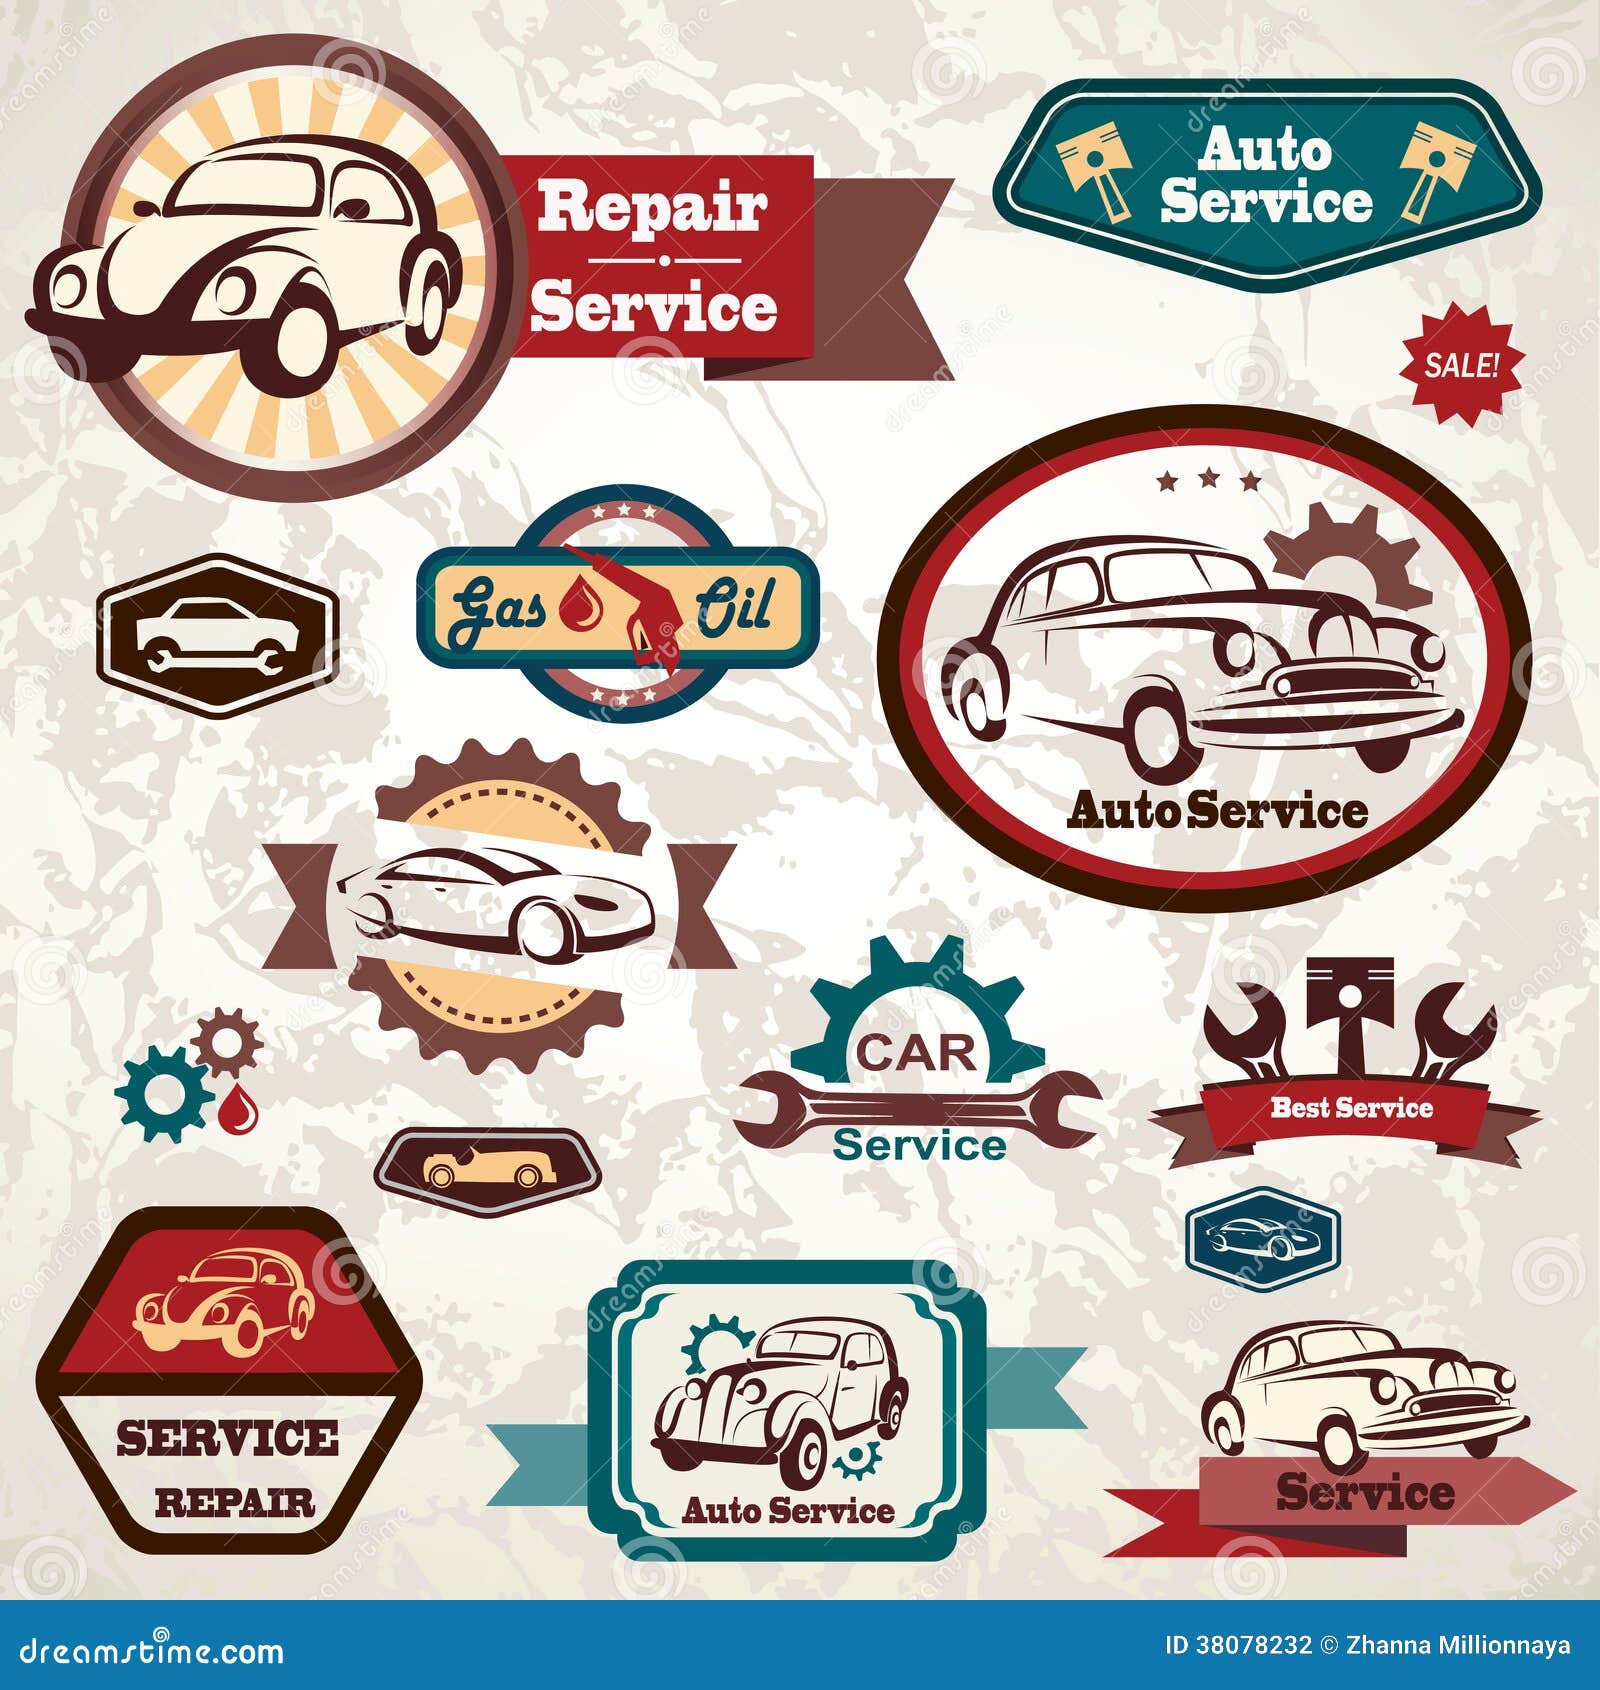 Car Service Retro Emblem Stock Vector Illustration Of Quality 38078232